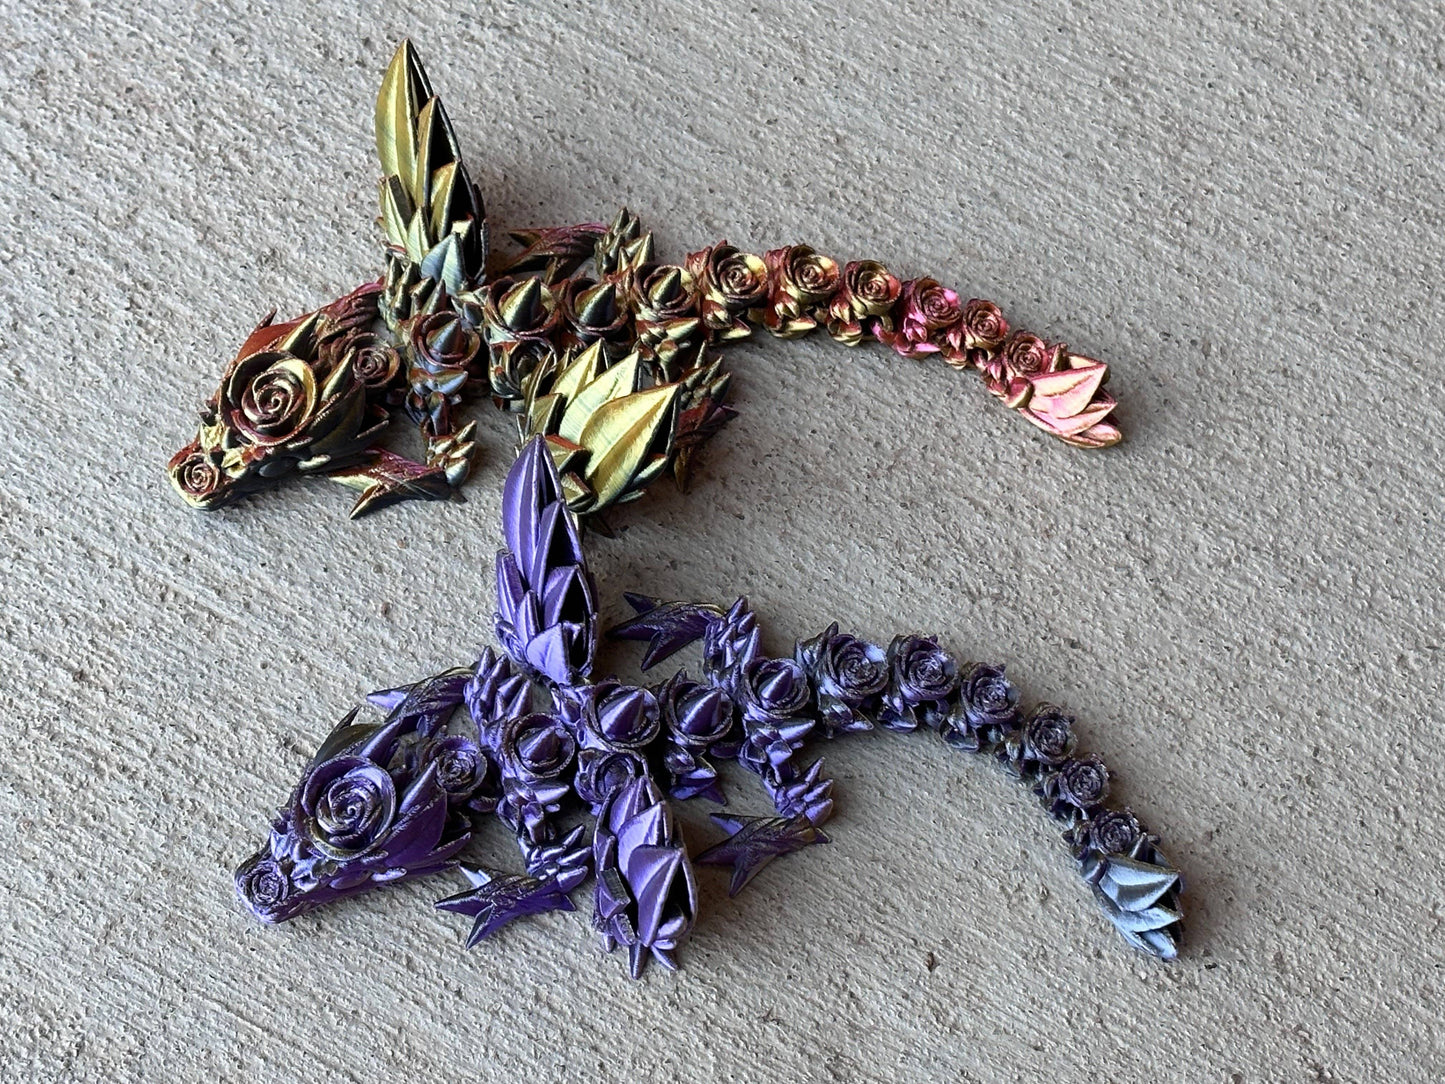 3D Printed Baby Rose Wing Dragon